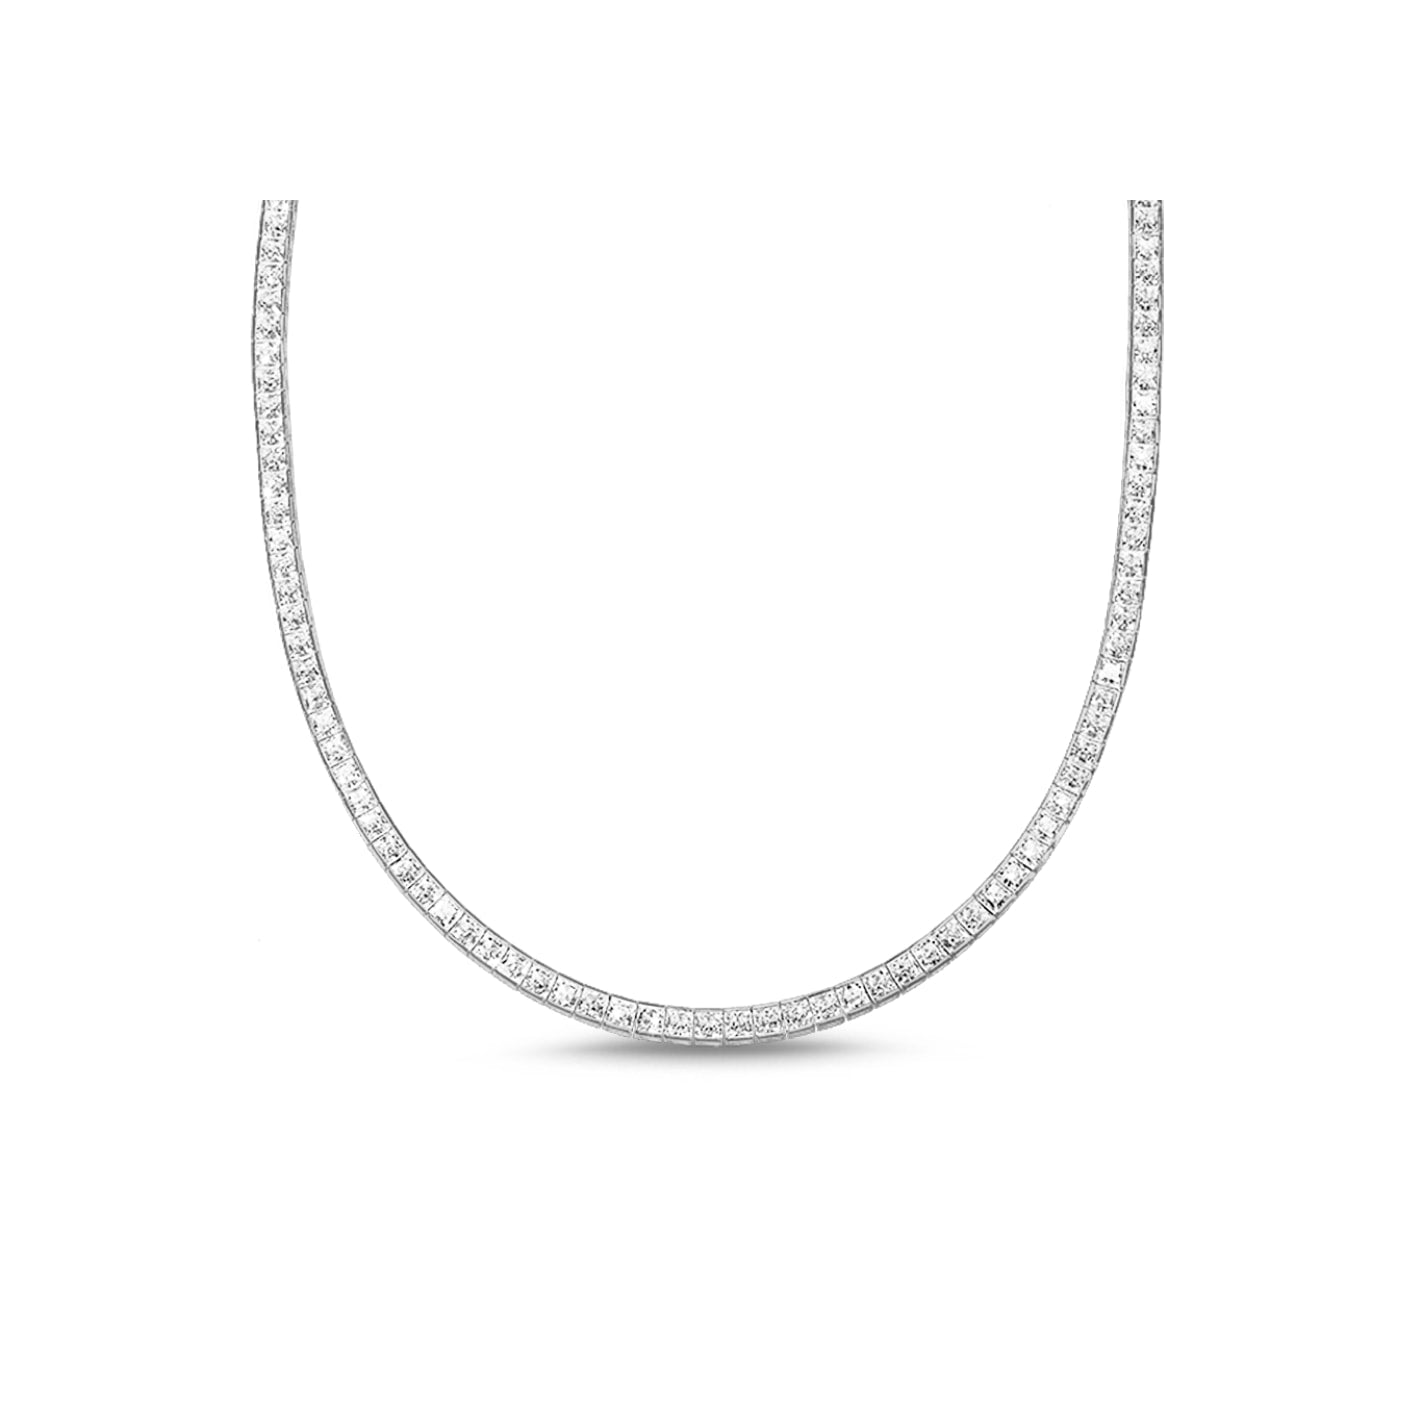 Hariette Princess Diamond Necklace in 18k White Gold Vermeil